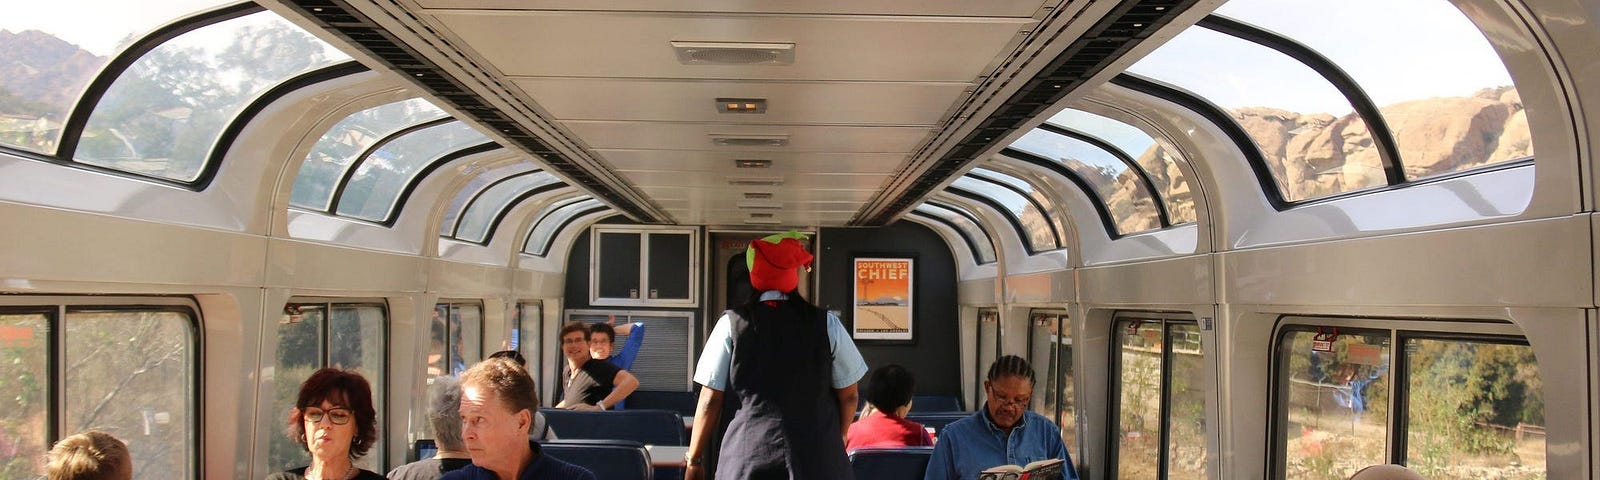 Inside an Amtrak train with passengers.